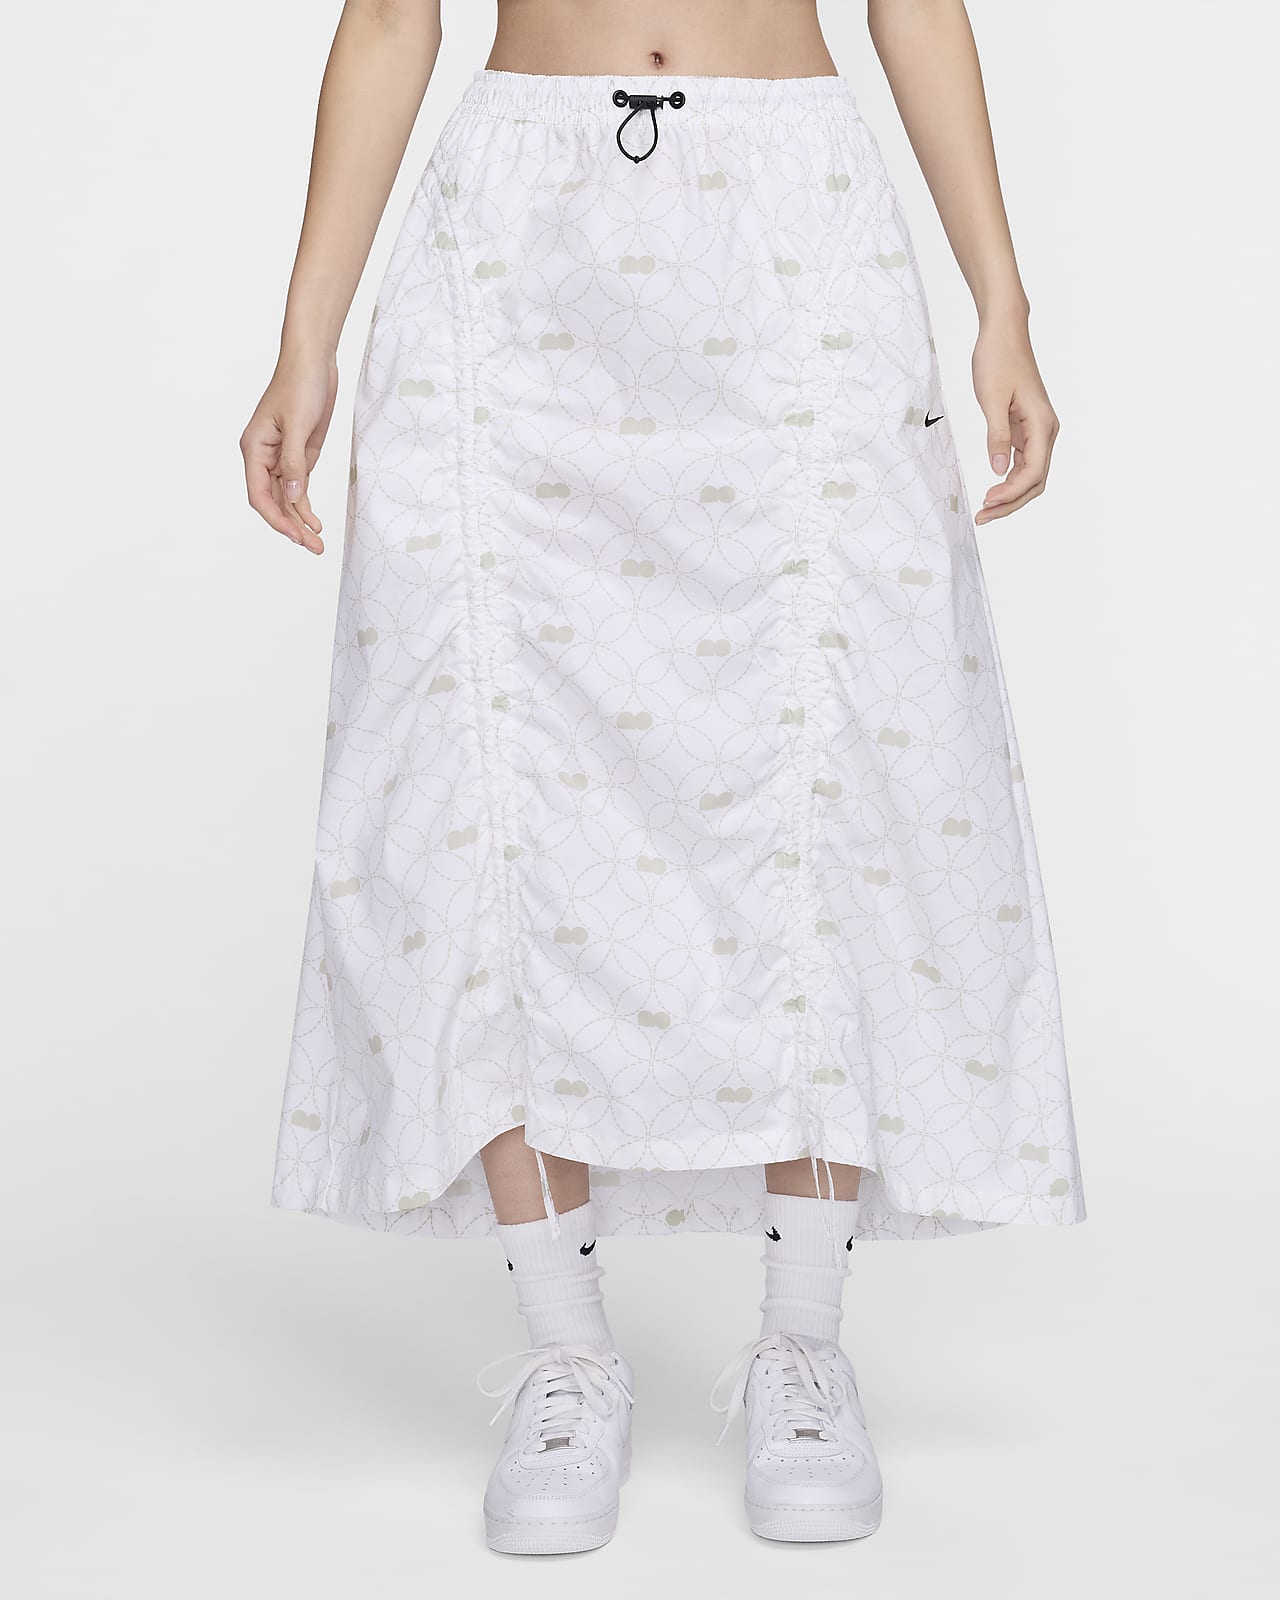 Naomi Osaka Women's High-Waisted Woven Skirt